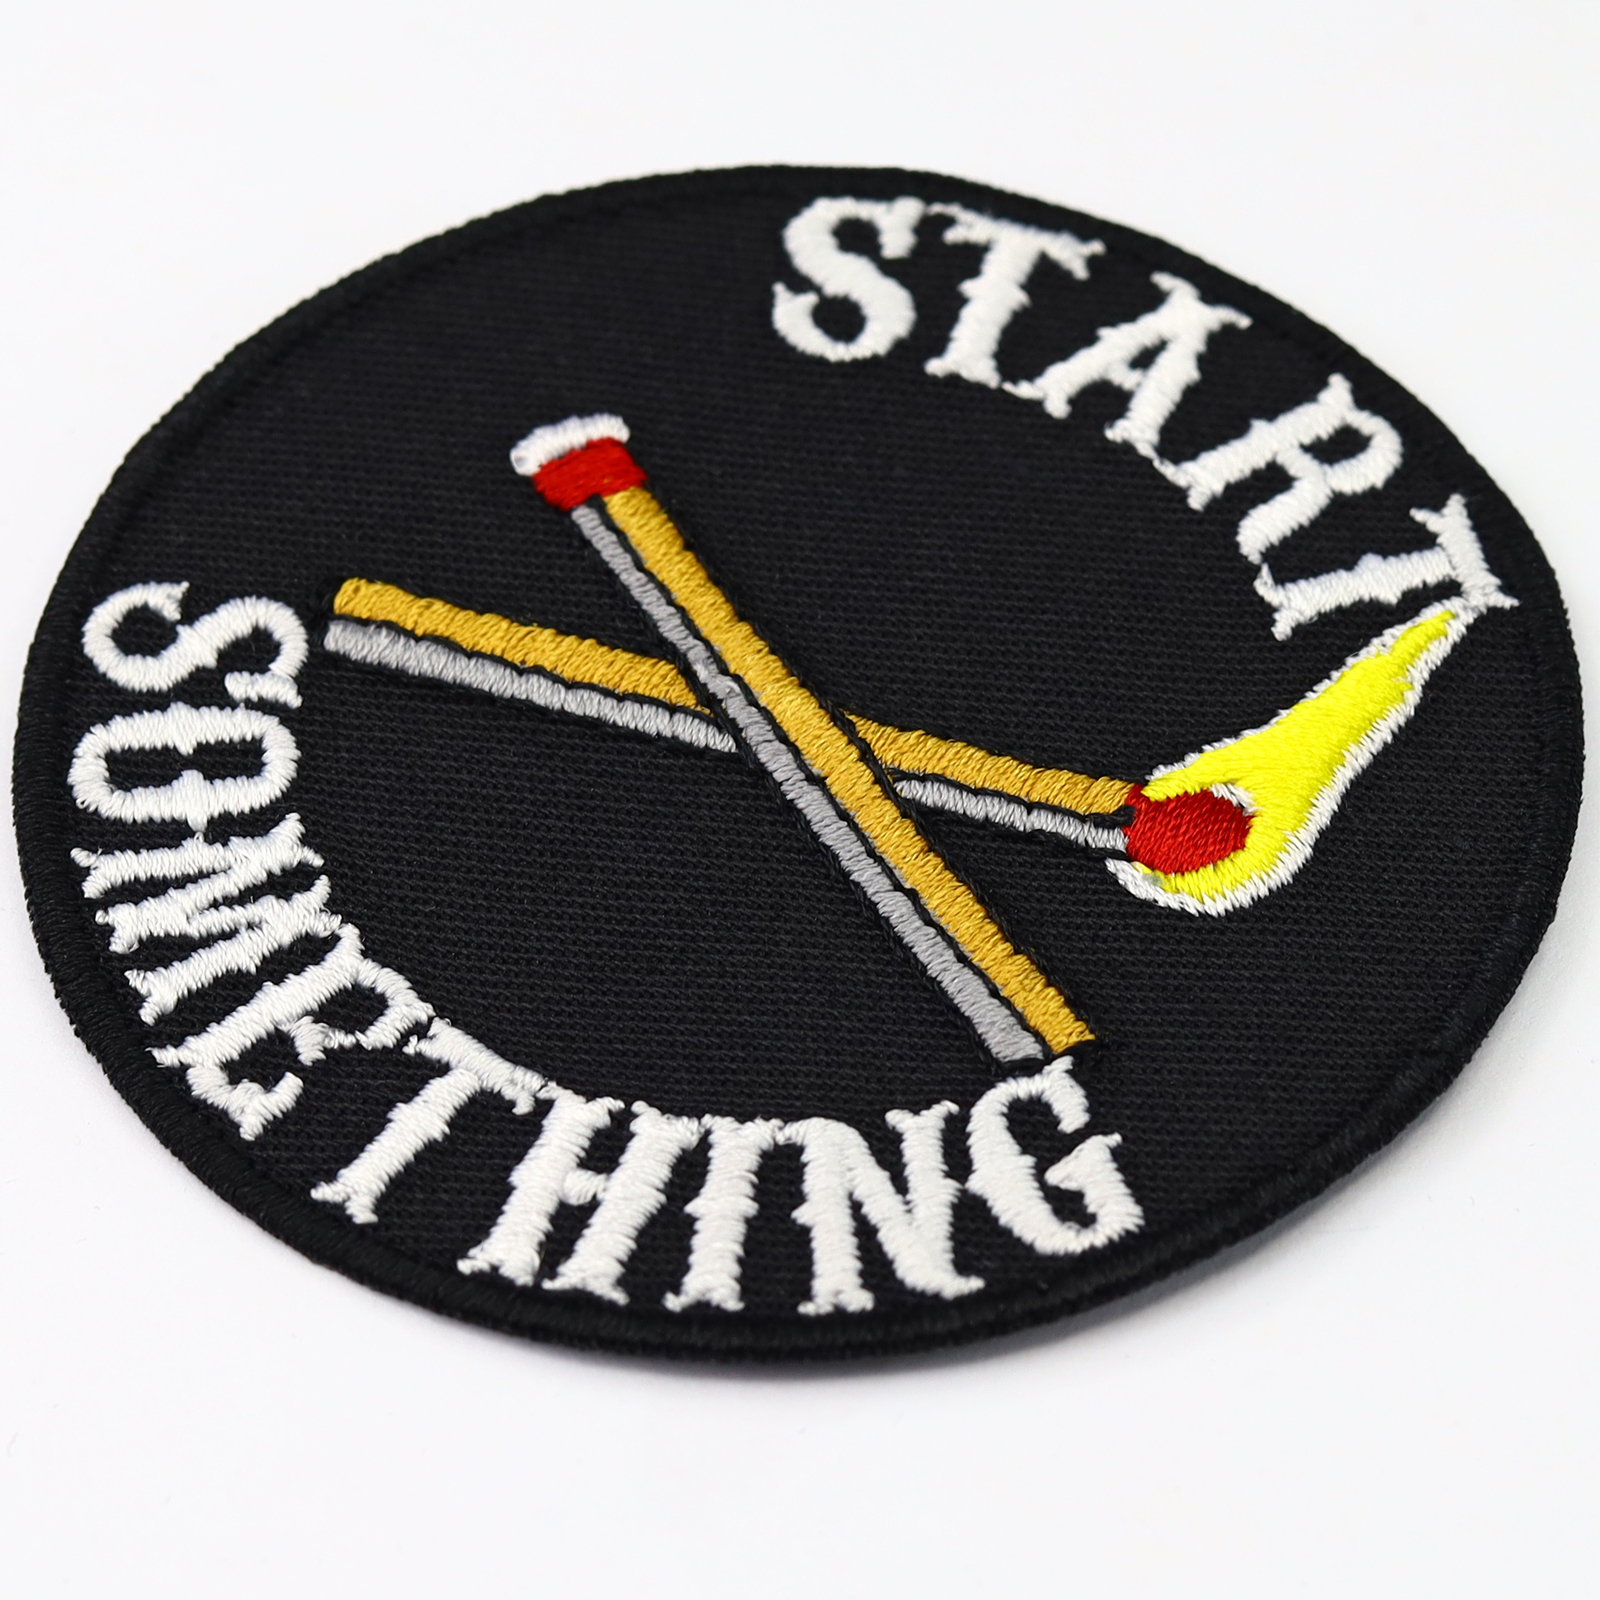 Start something - Patch